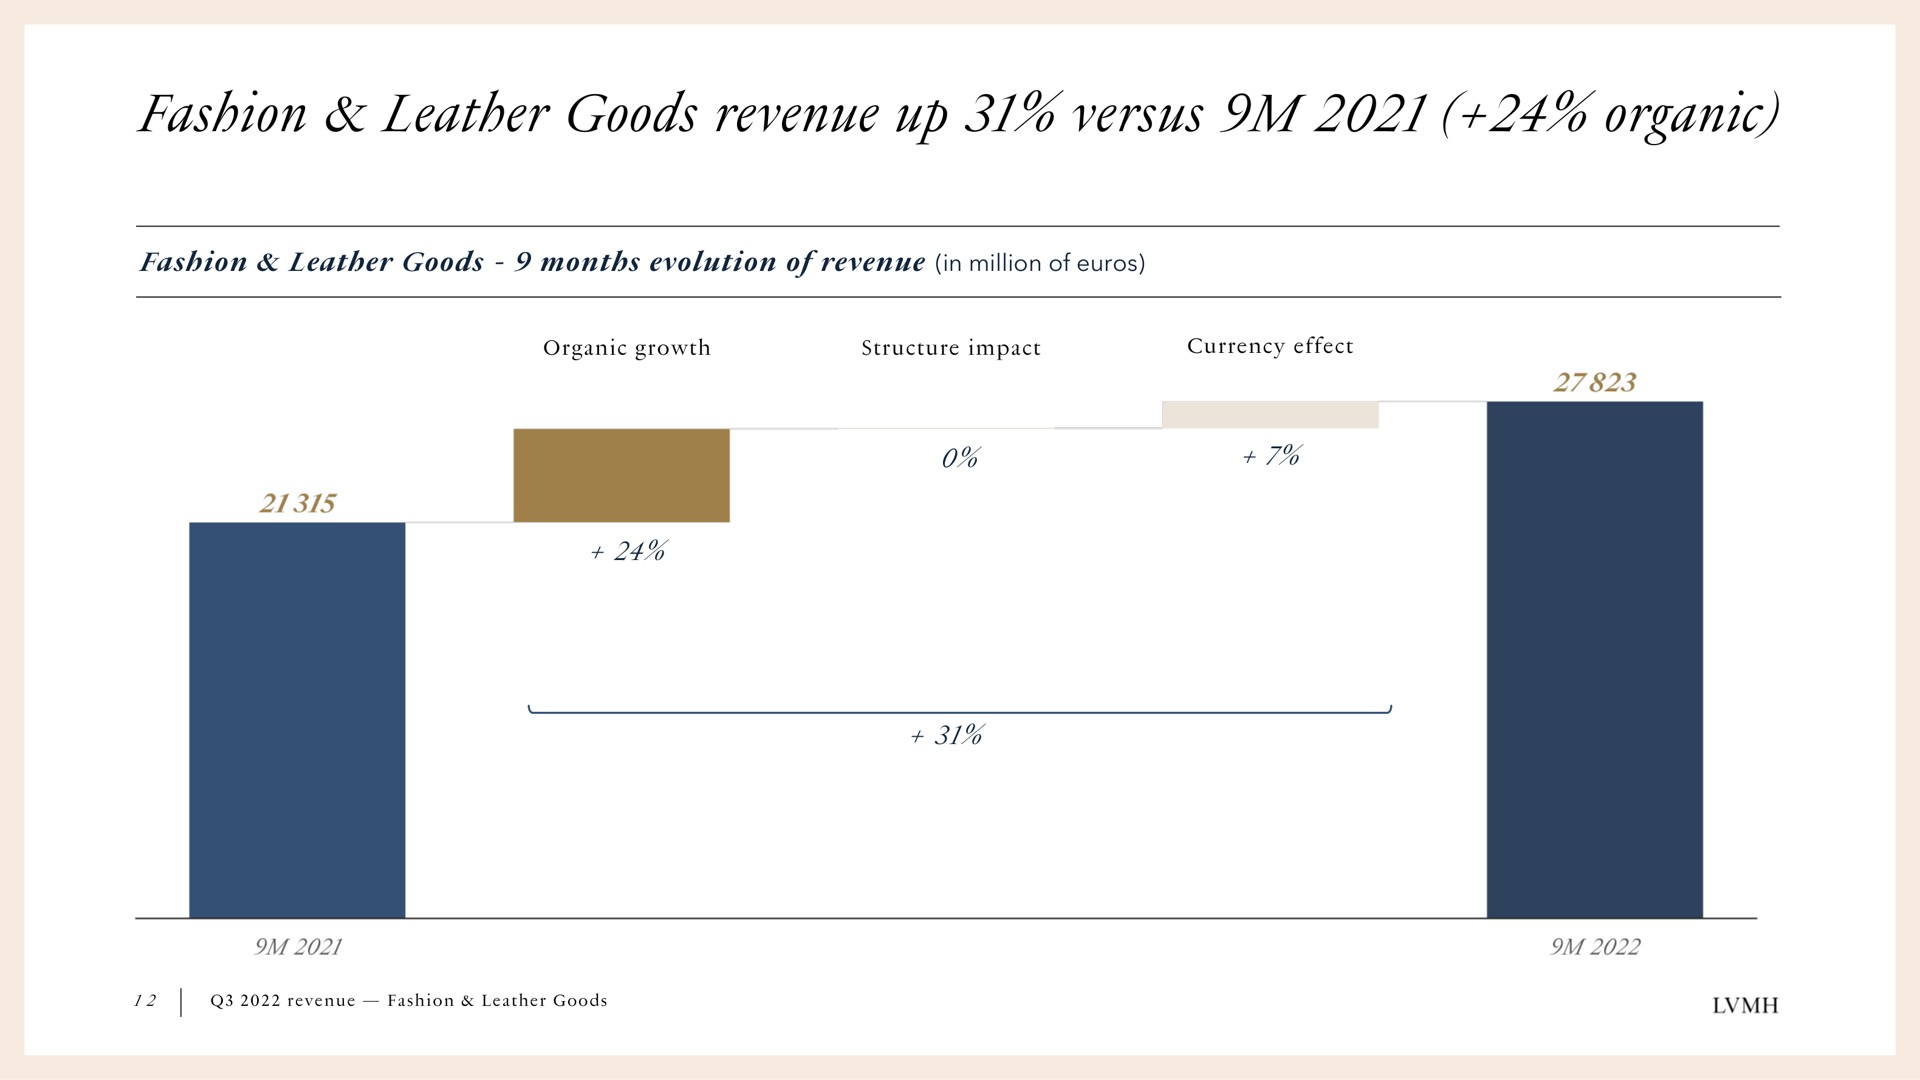 fashion leather goods revenue up versus organic | LVMH